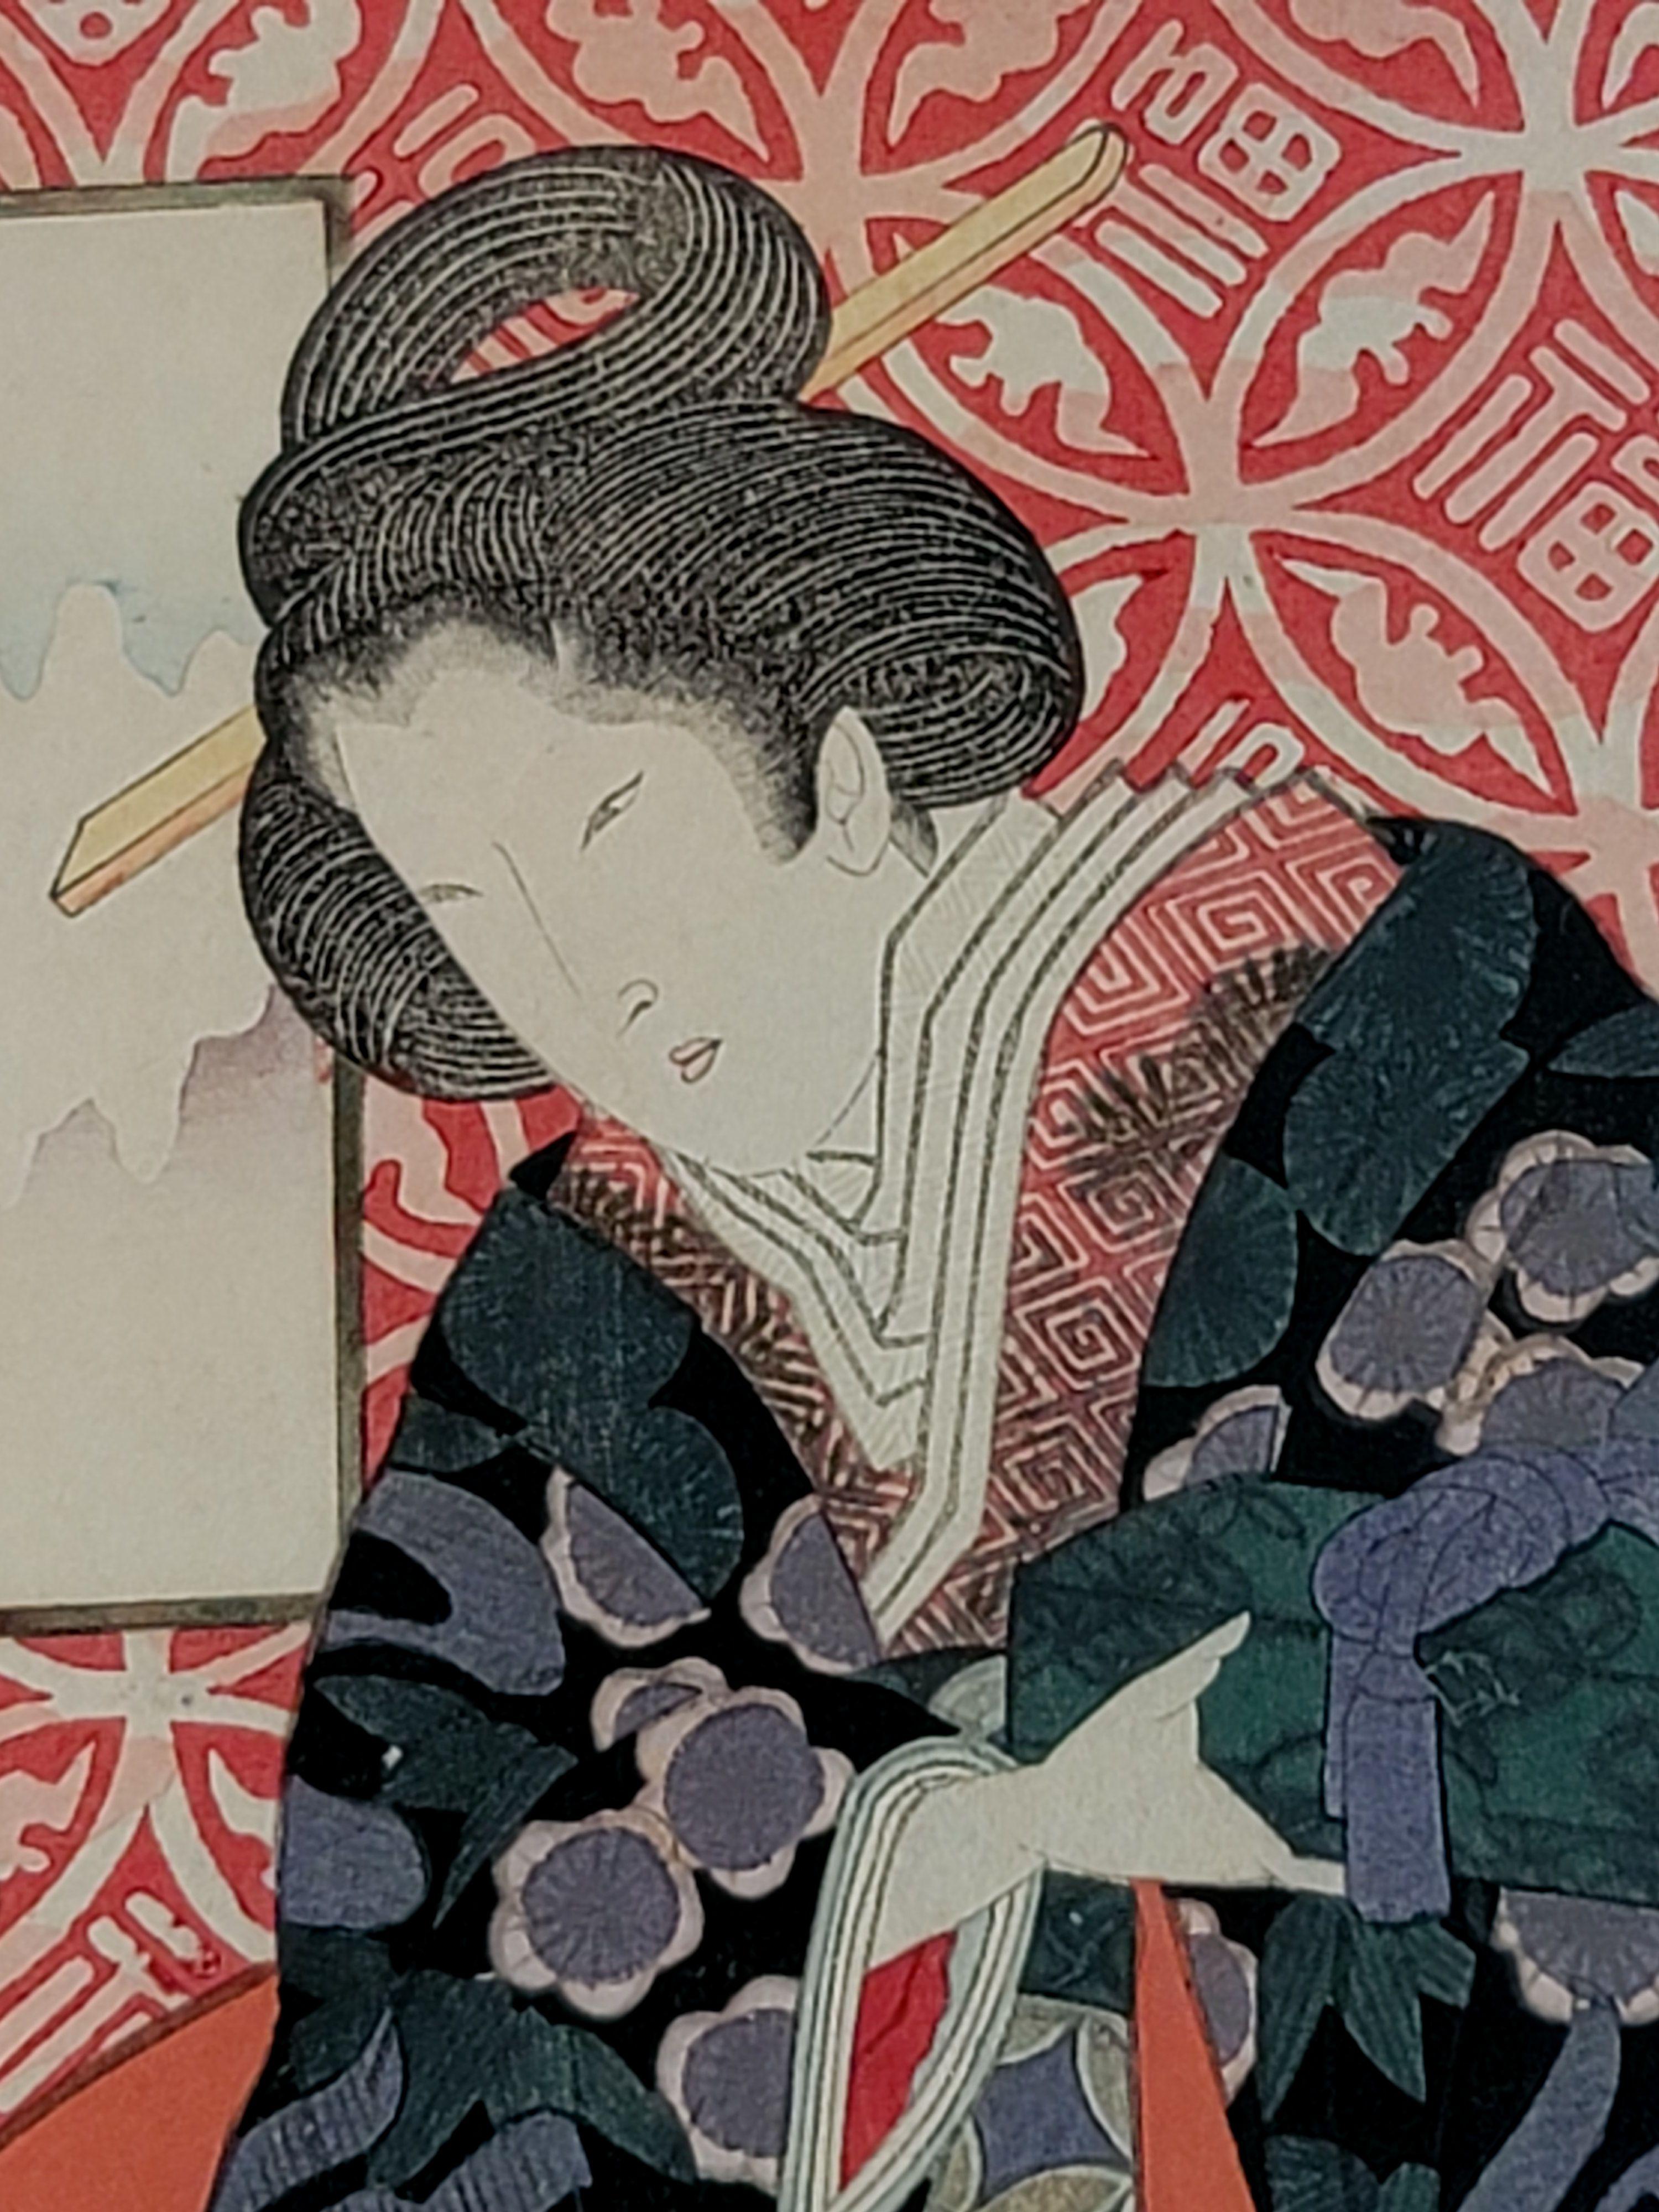 Japanese Woodblock Gakutei (1786-1868) by Harunobu Sugawara, original and unframed.

ABOUT THE ARTIST

Yashima Gakutei (1786-1868)
Born in Edo as Harunobu Sugawara, Gakutei Yashima studied printmaking under Shuei and Hokkei. He moved to Osaka in the